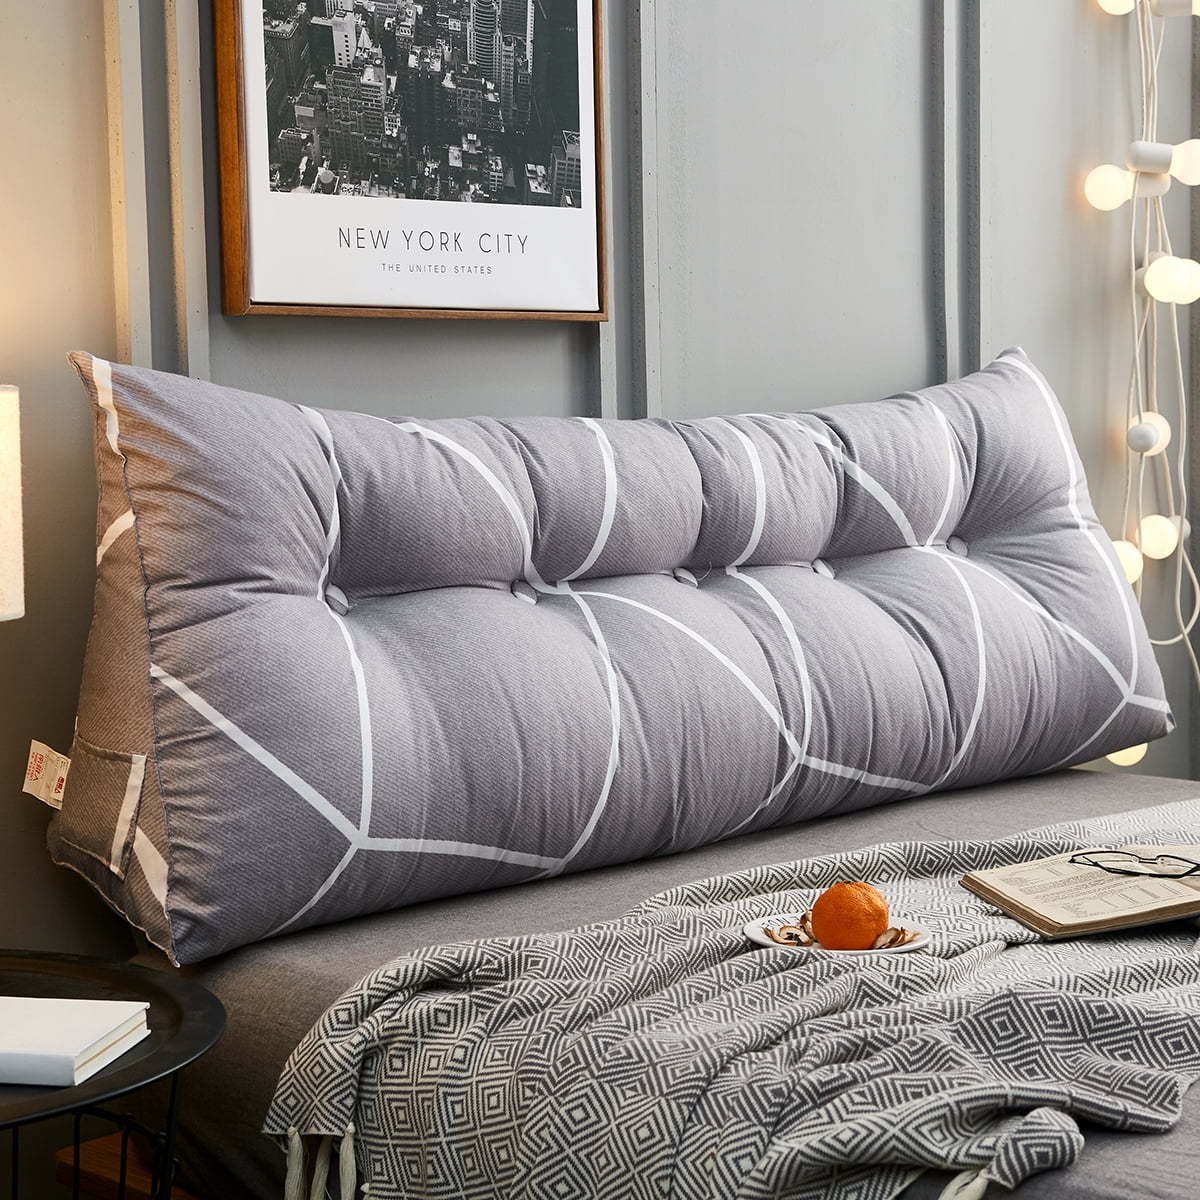 71'' White Triangular Wedge Lumbar Pillow Support Cushion Backrest Bed Headboard